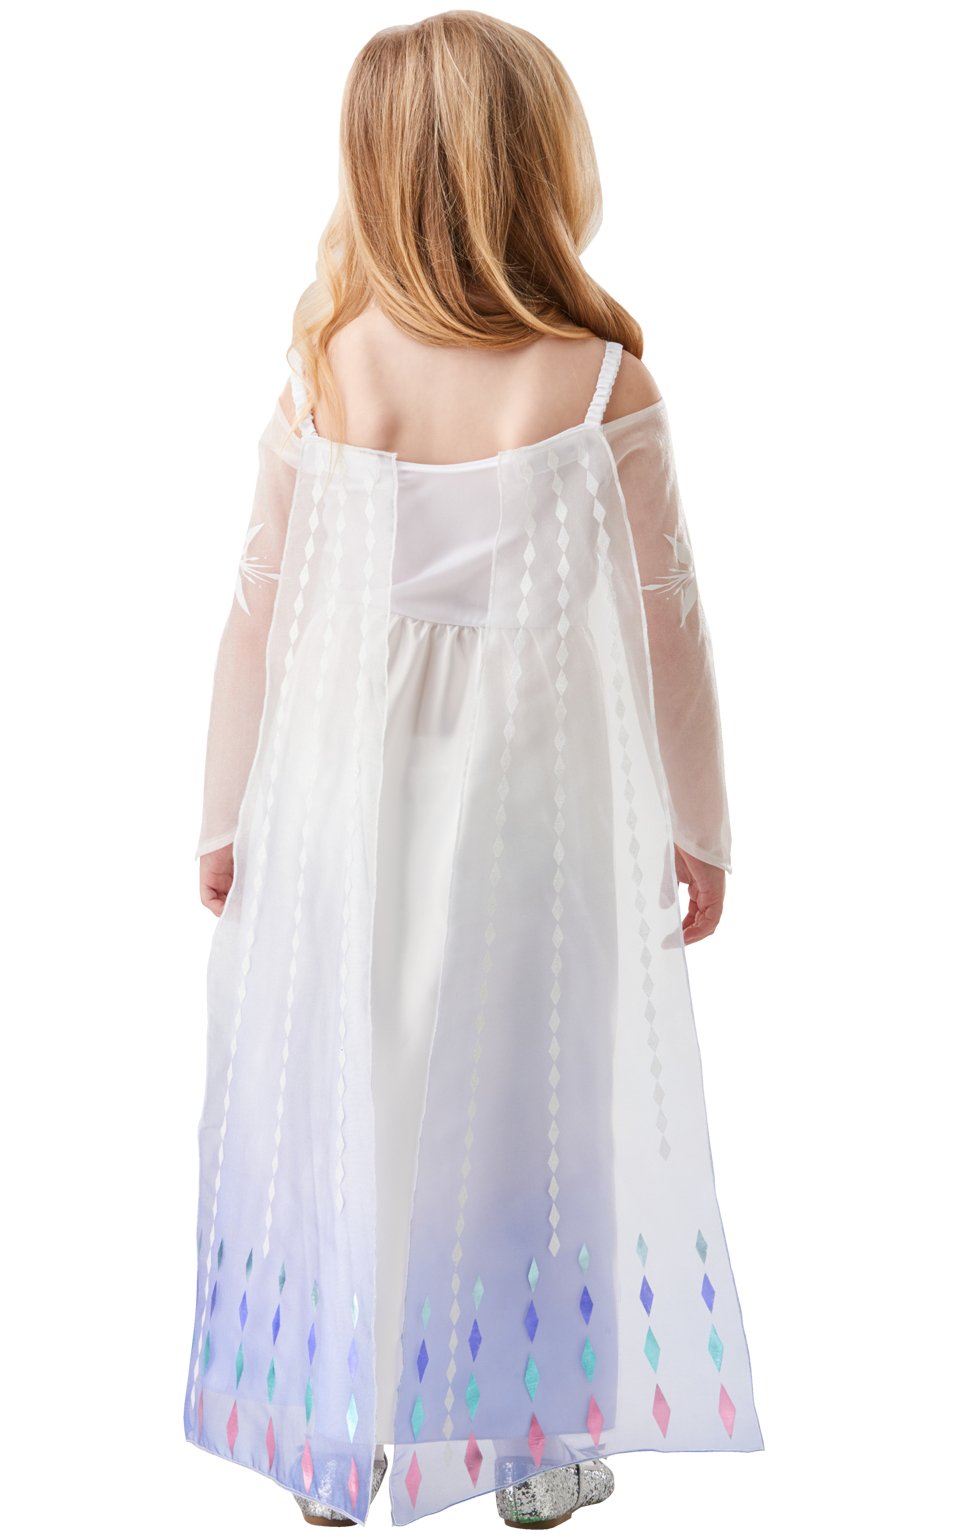 Frozen 2 Frozen Elsa Epilogue Dress Costume_2